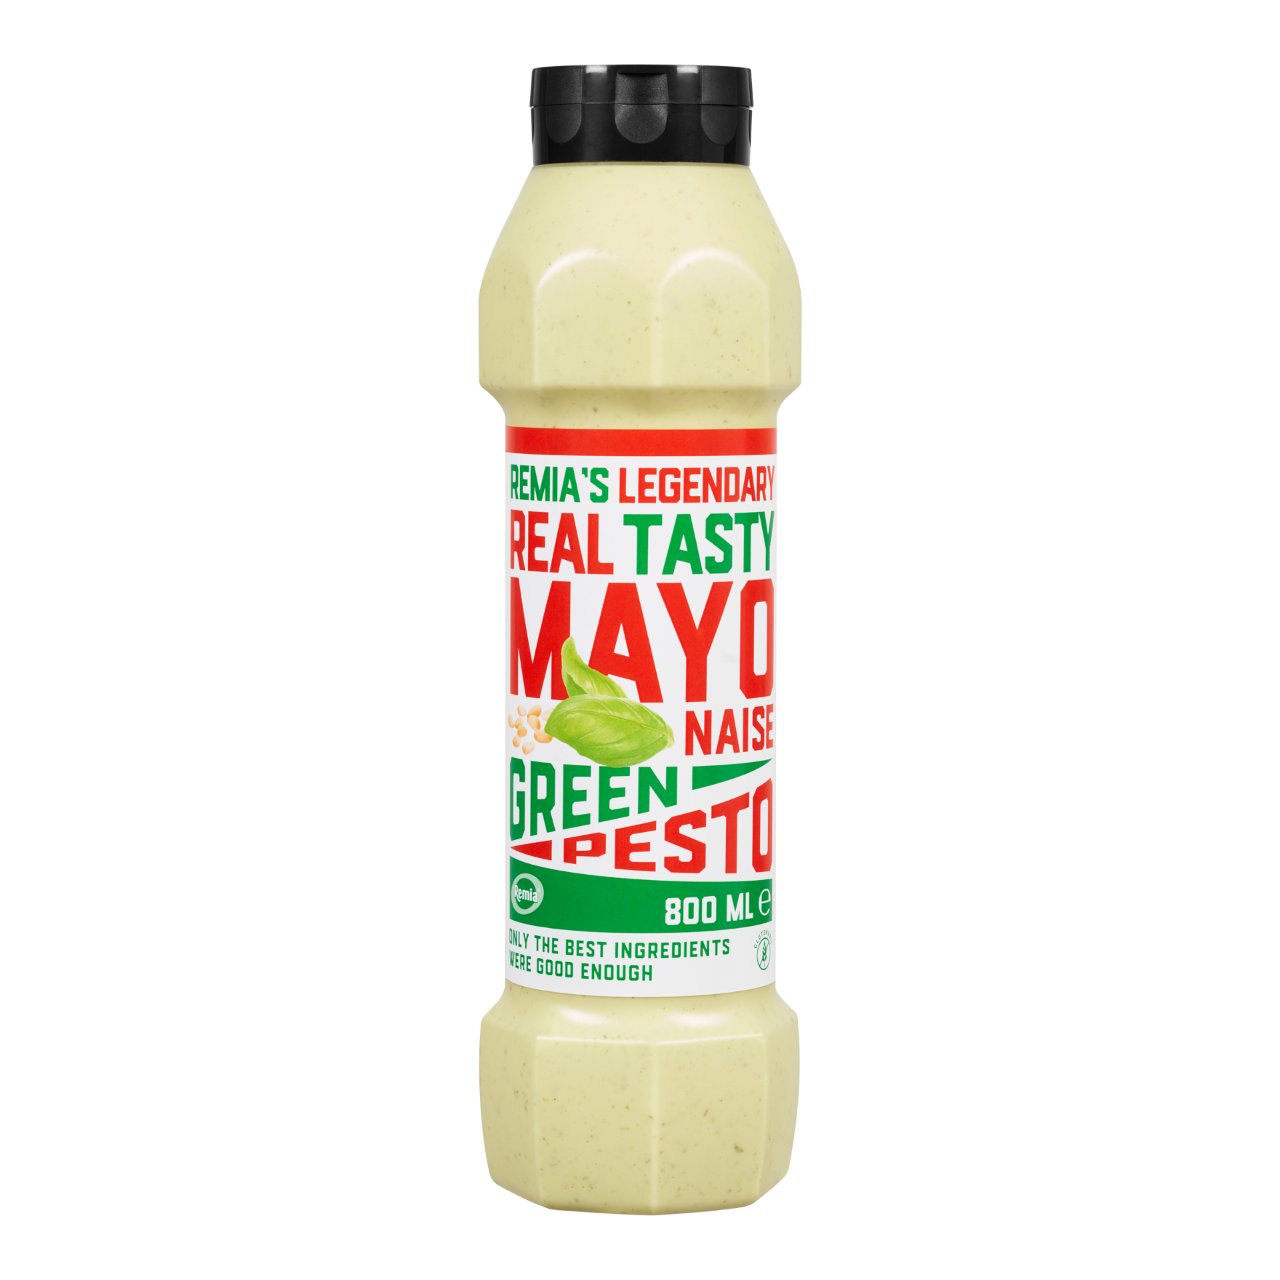 Mayo green pesto